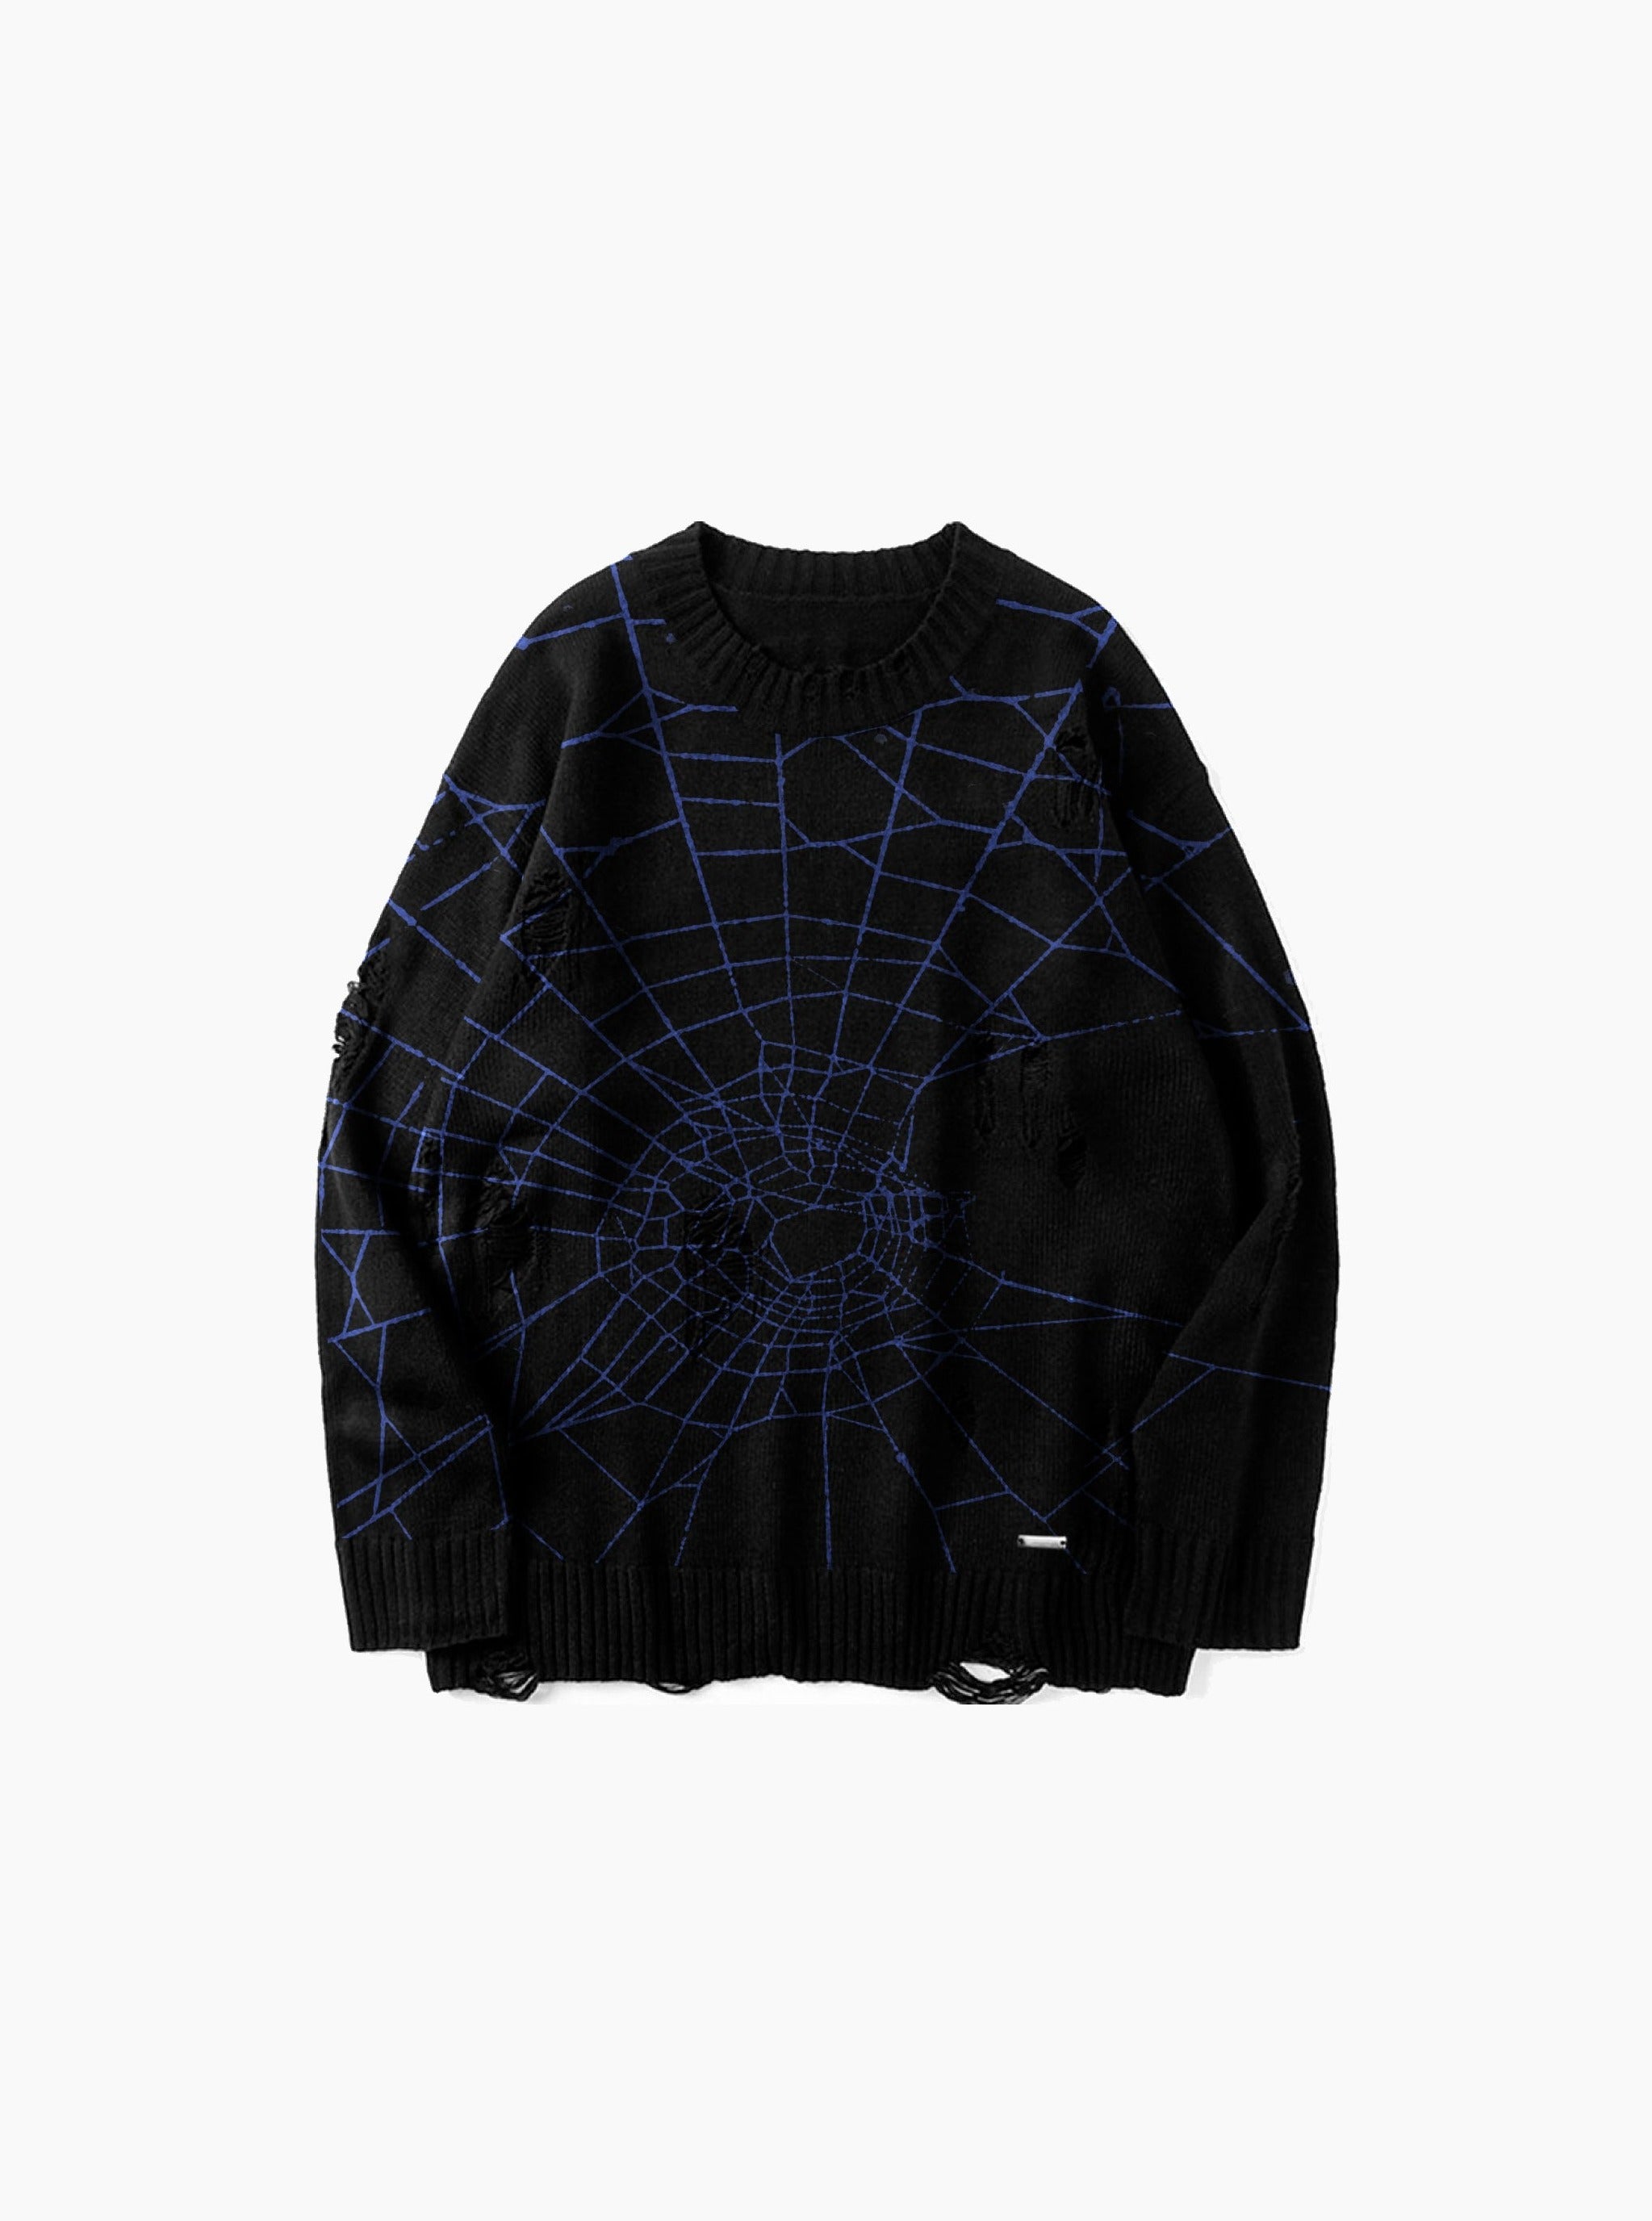 Sole et. Al Dark Web Distressed Knit Sweater